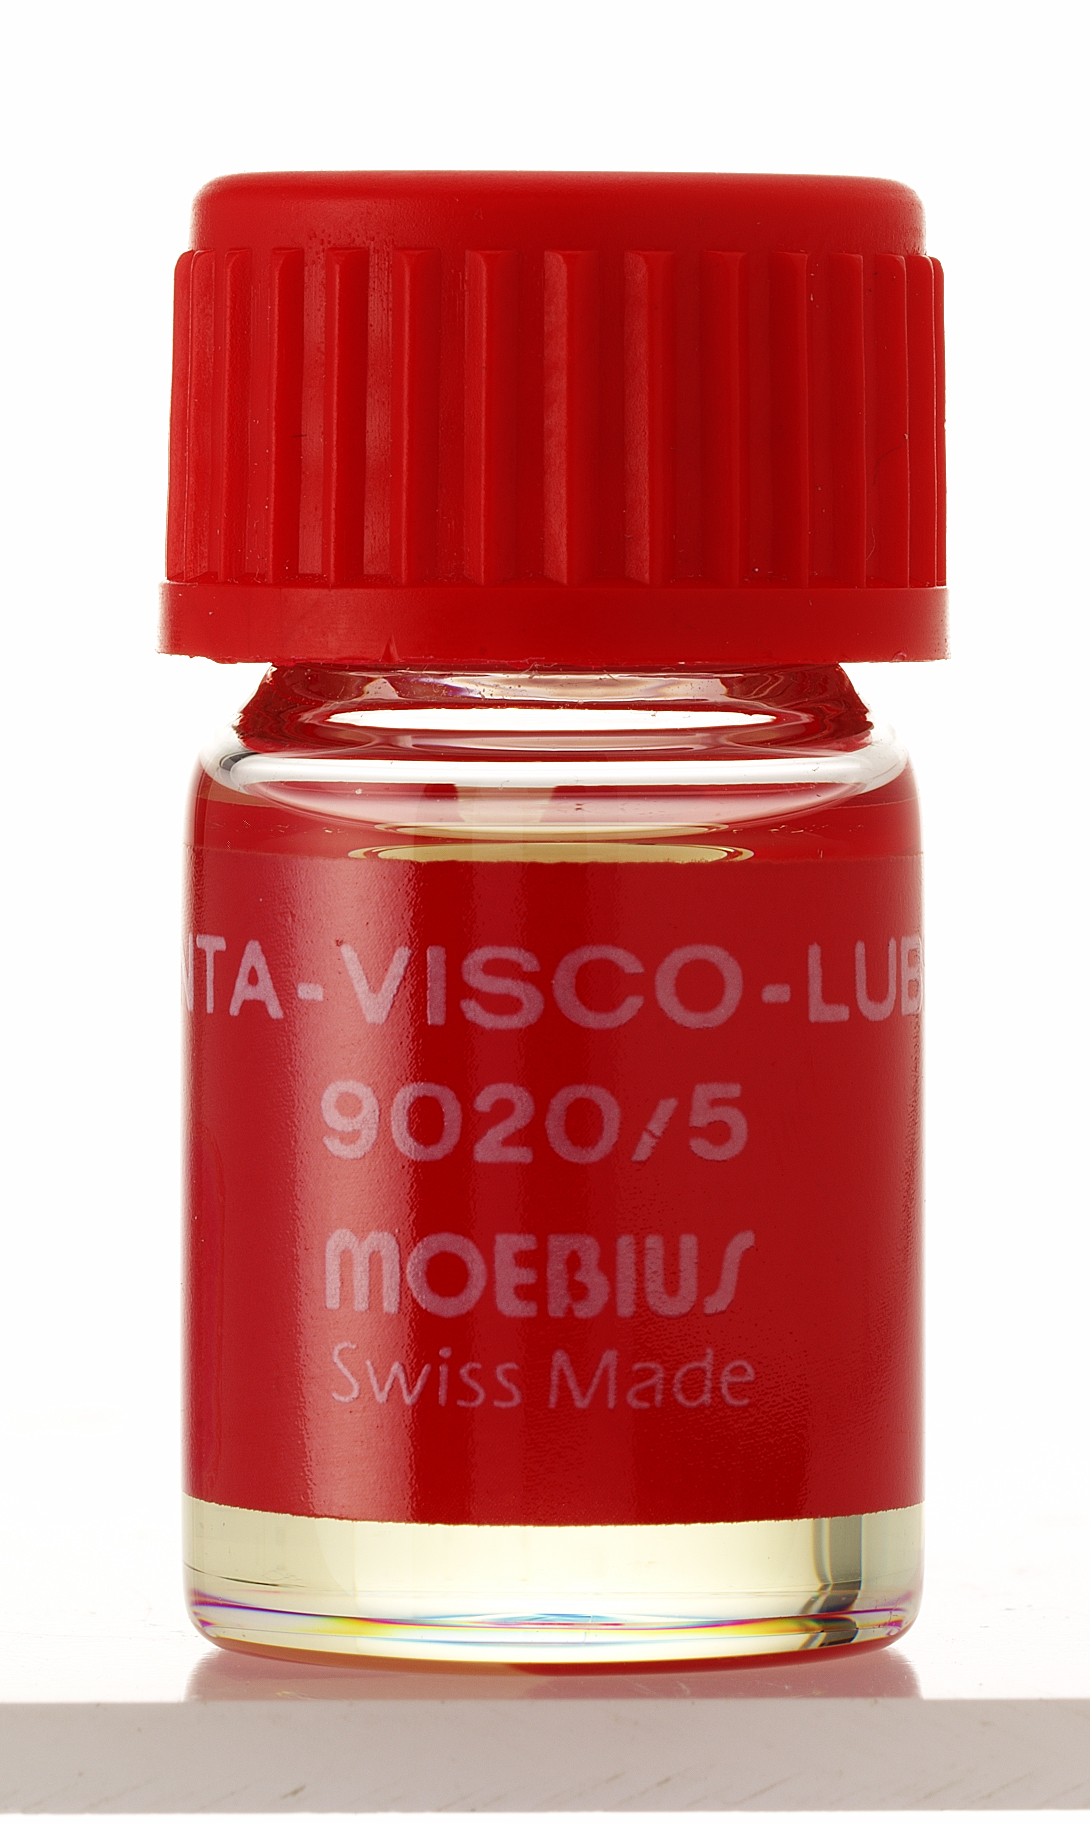 Öl Synta-Visco-Lube Moebius 9020 - 50 ml